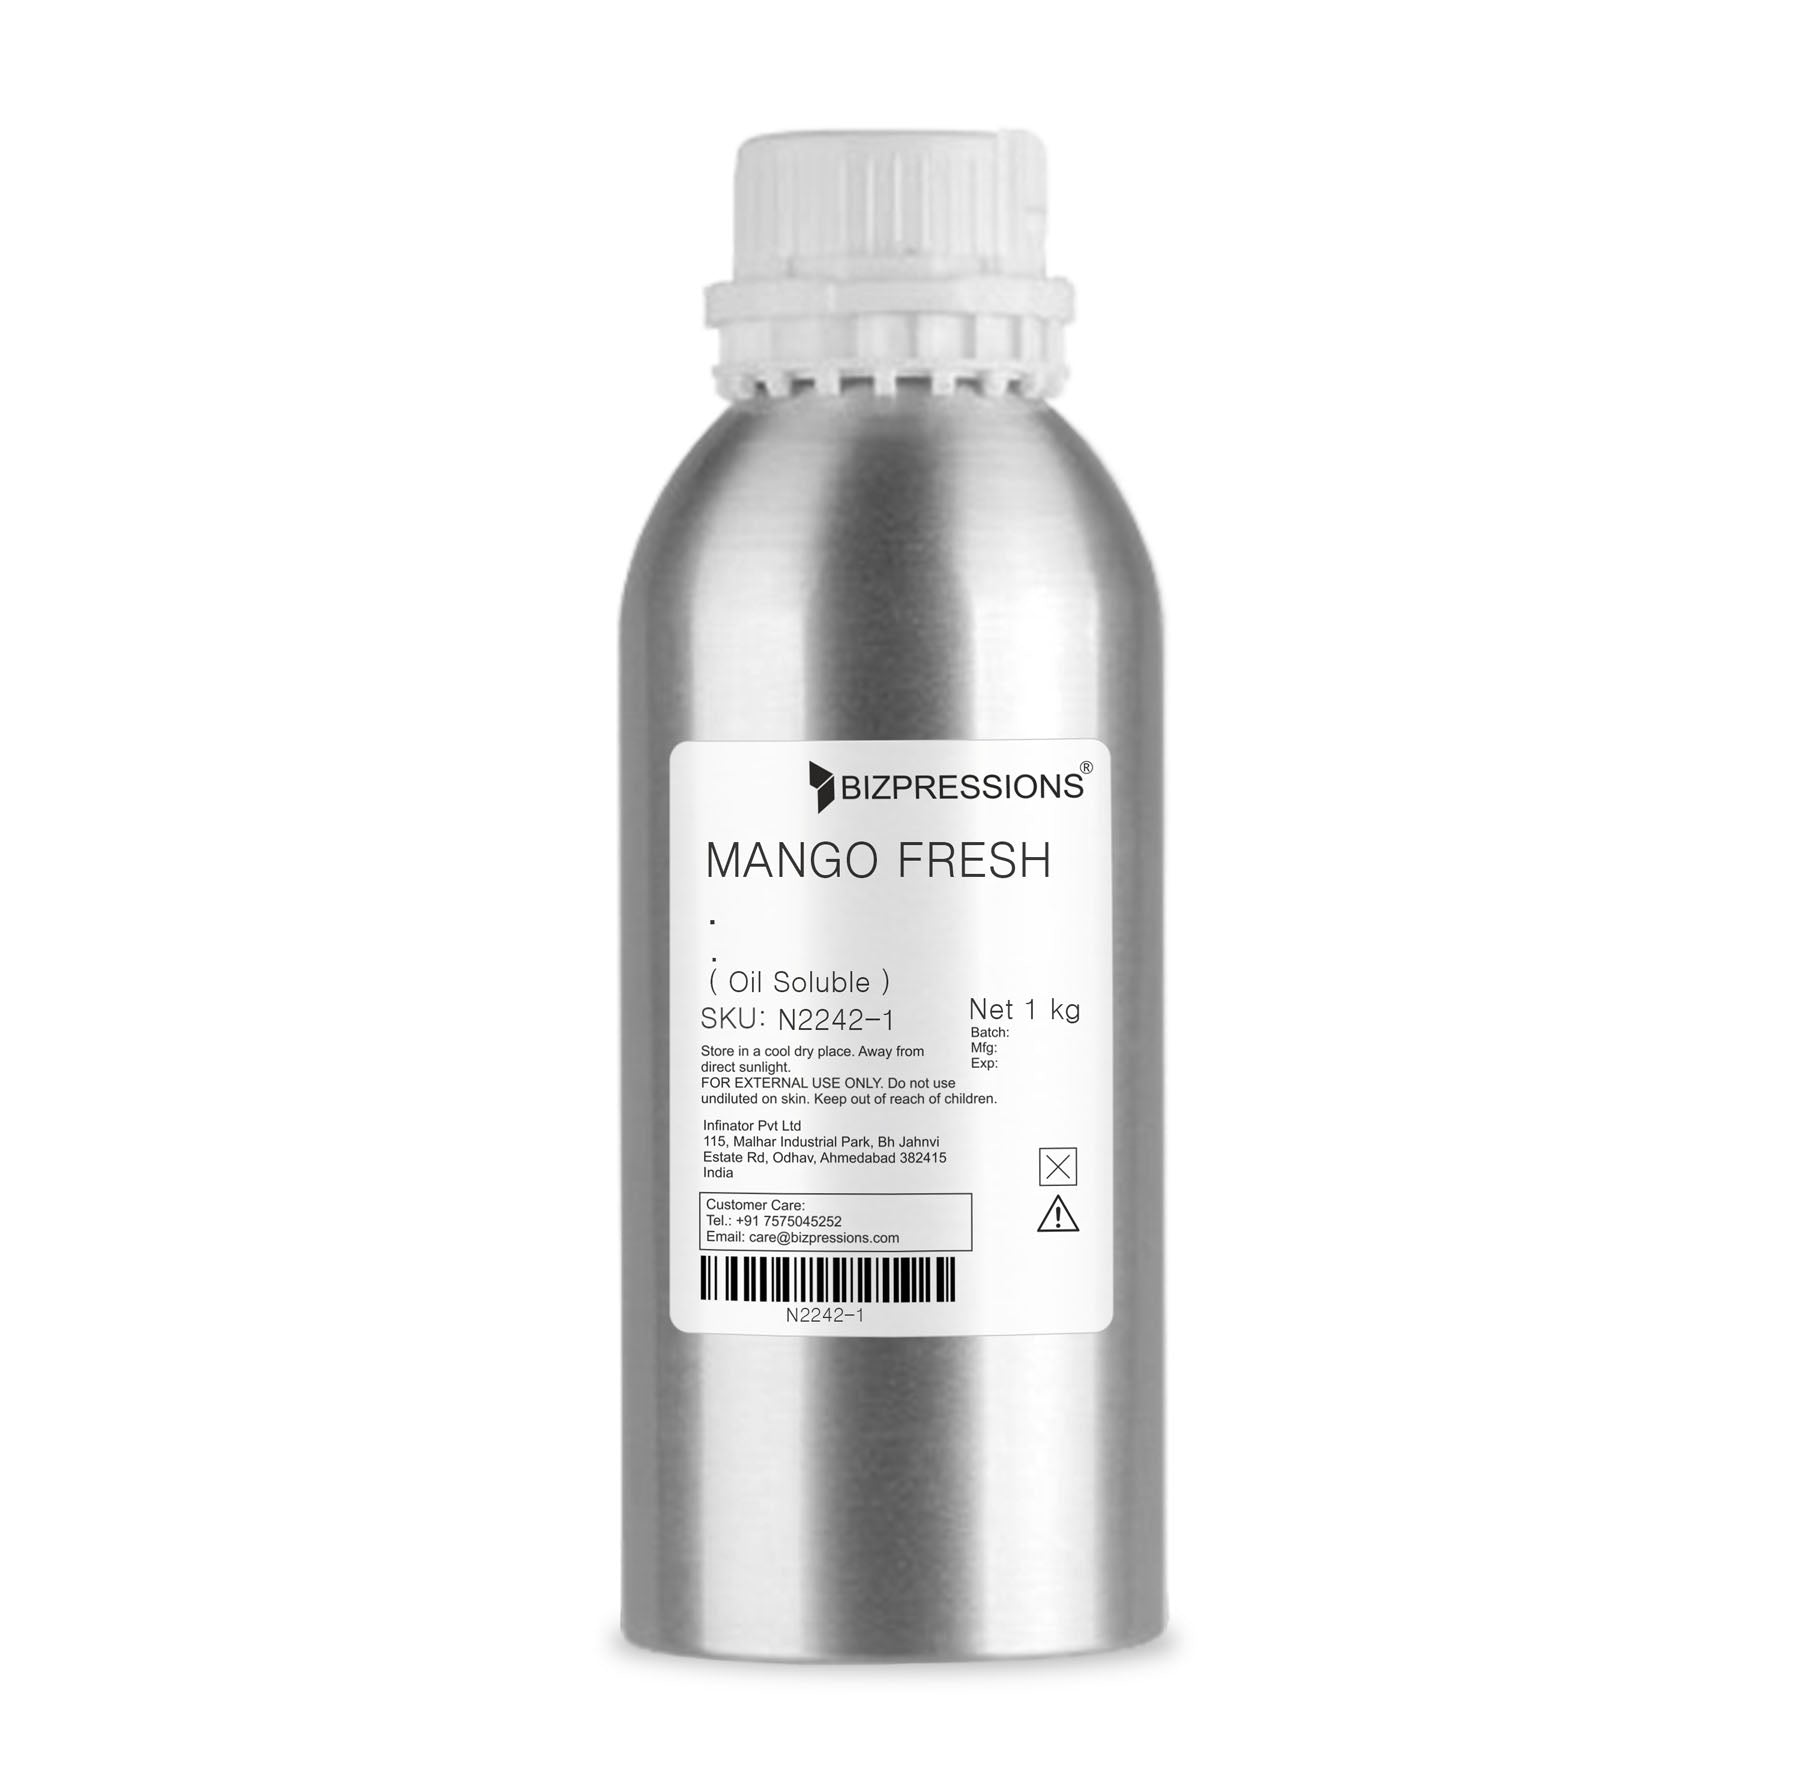 MANGO FRESH - Fragrance ( Oil Soluble ) - 1 kg